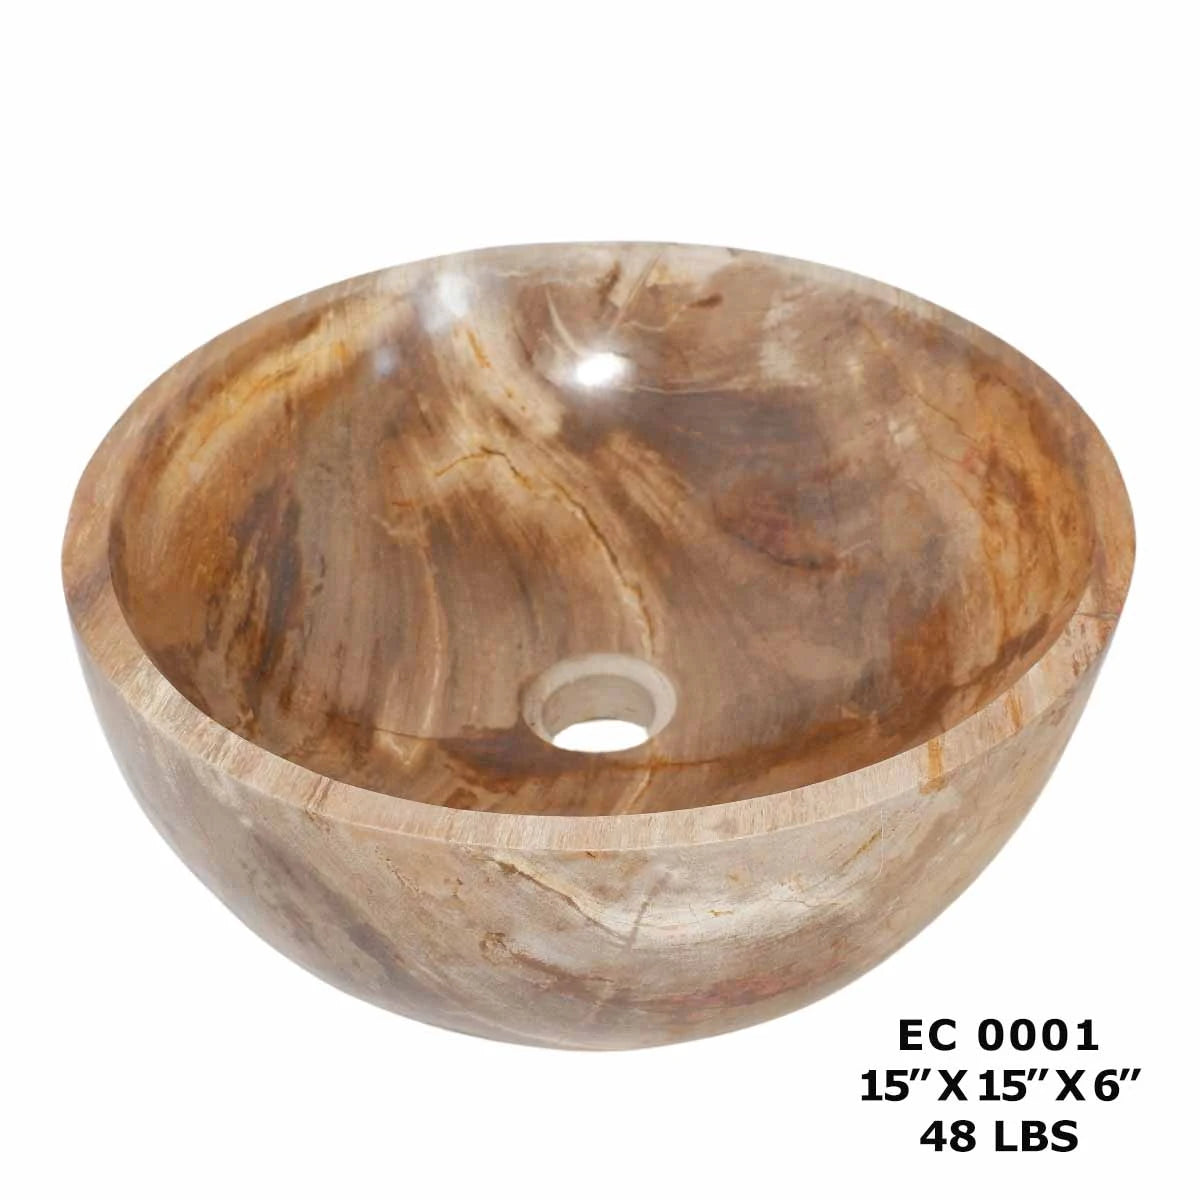 Petrified Wood Stone Sinks, Round Bowl Vessel Bathroom Sink EC0001